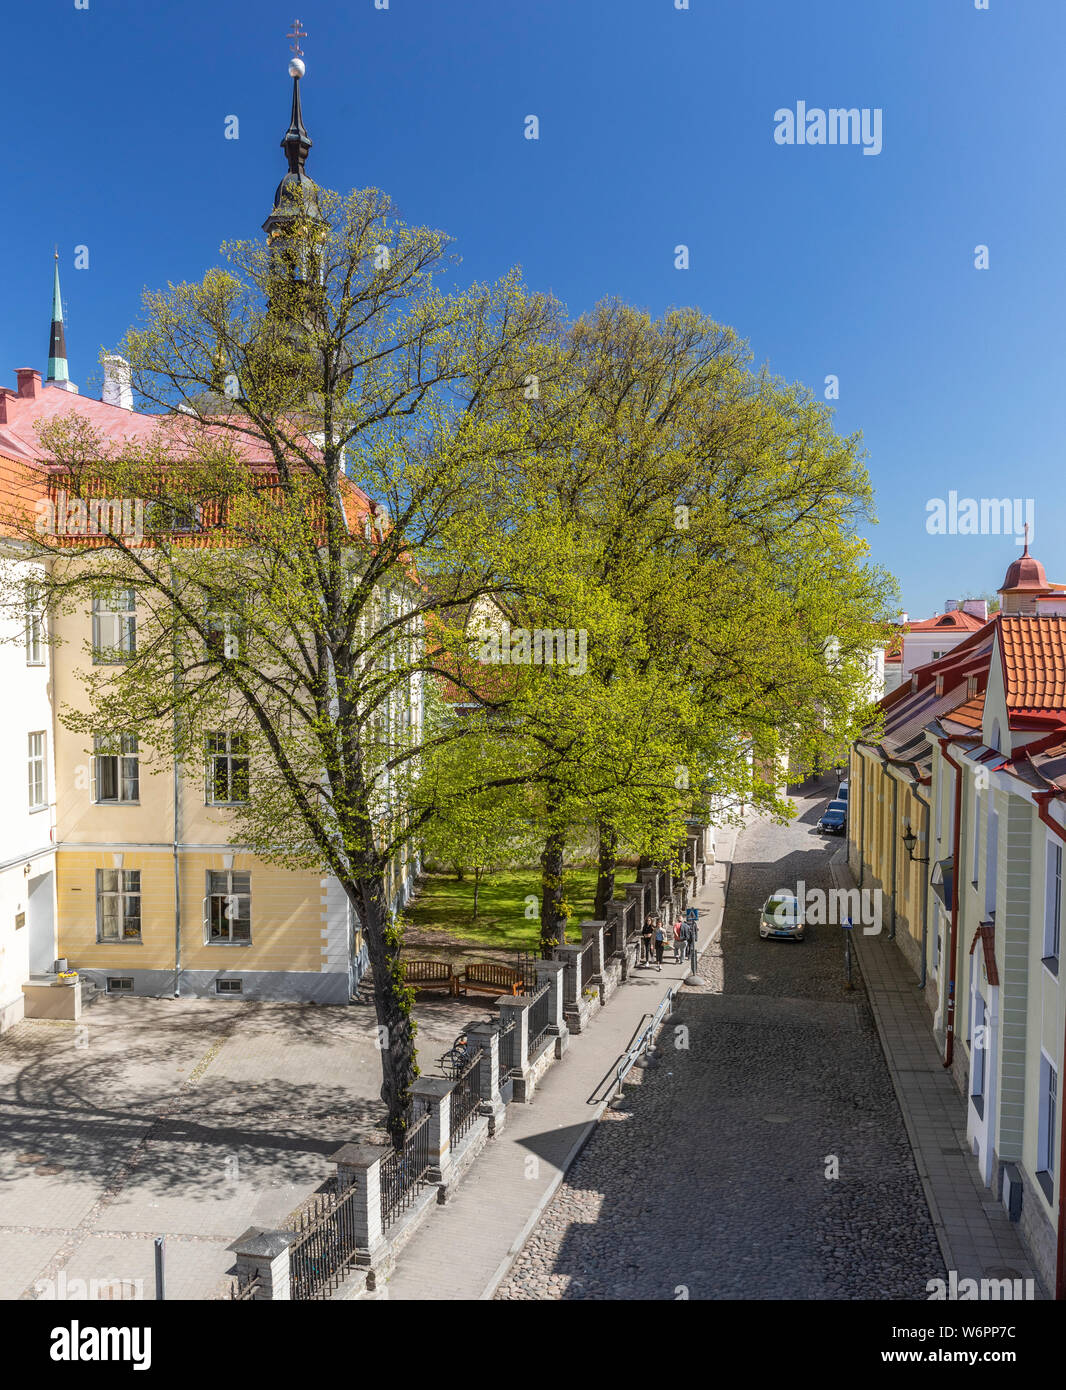 View of Gustav Adolphus (Gustav Adolfi) Training Center and Gymnasium, Old Town, Tallinn, Estonia on a Sunny Spring Day Stock Photo